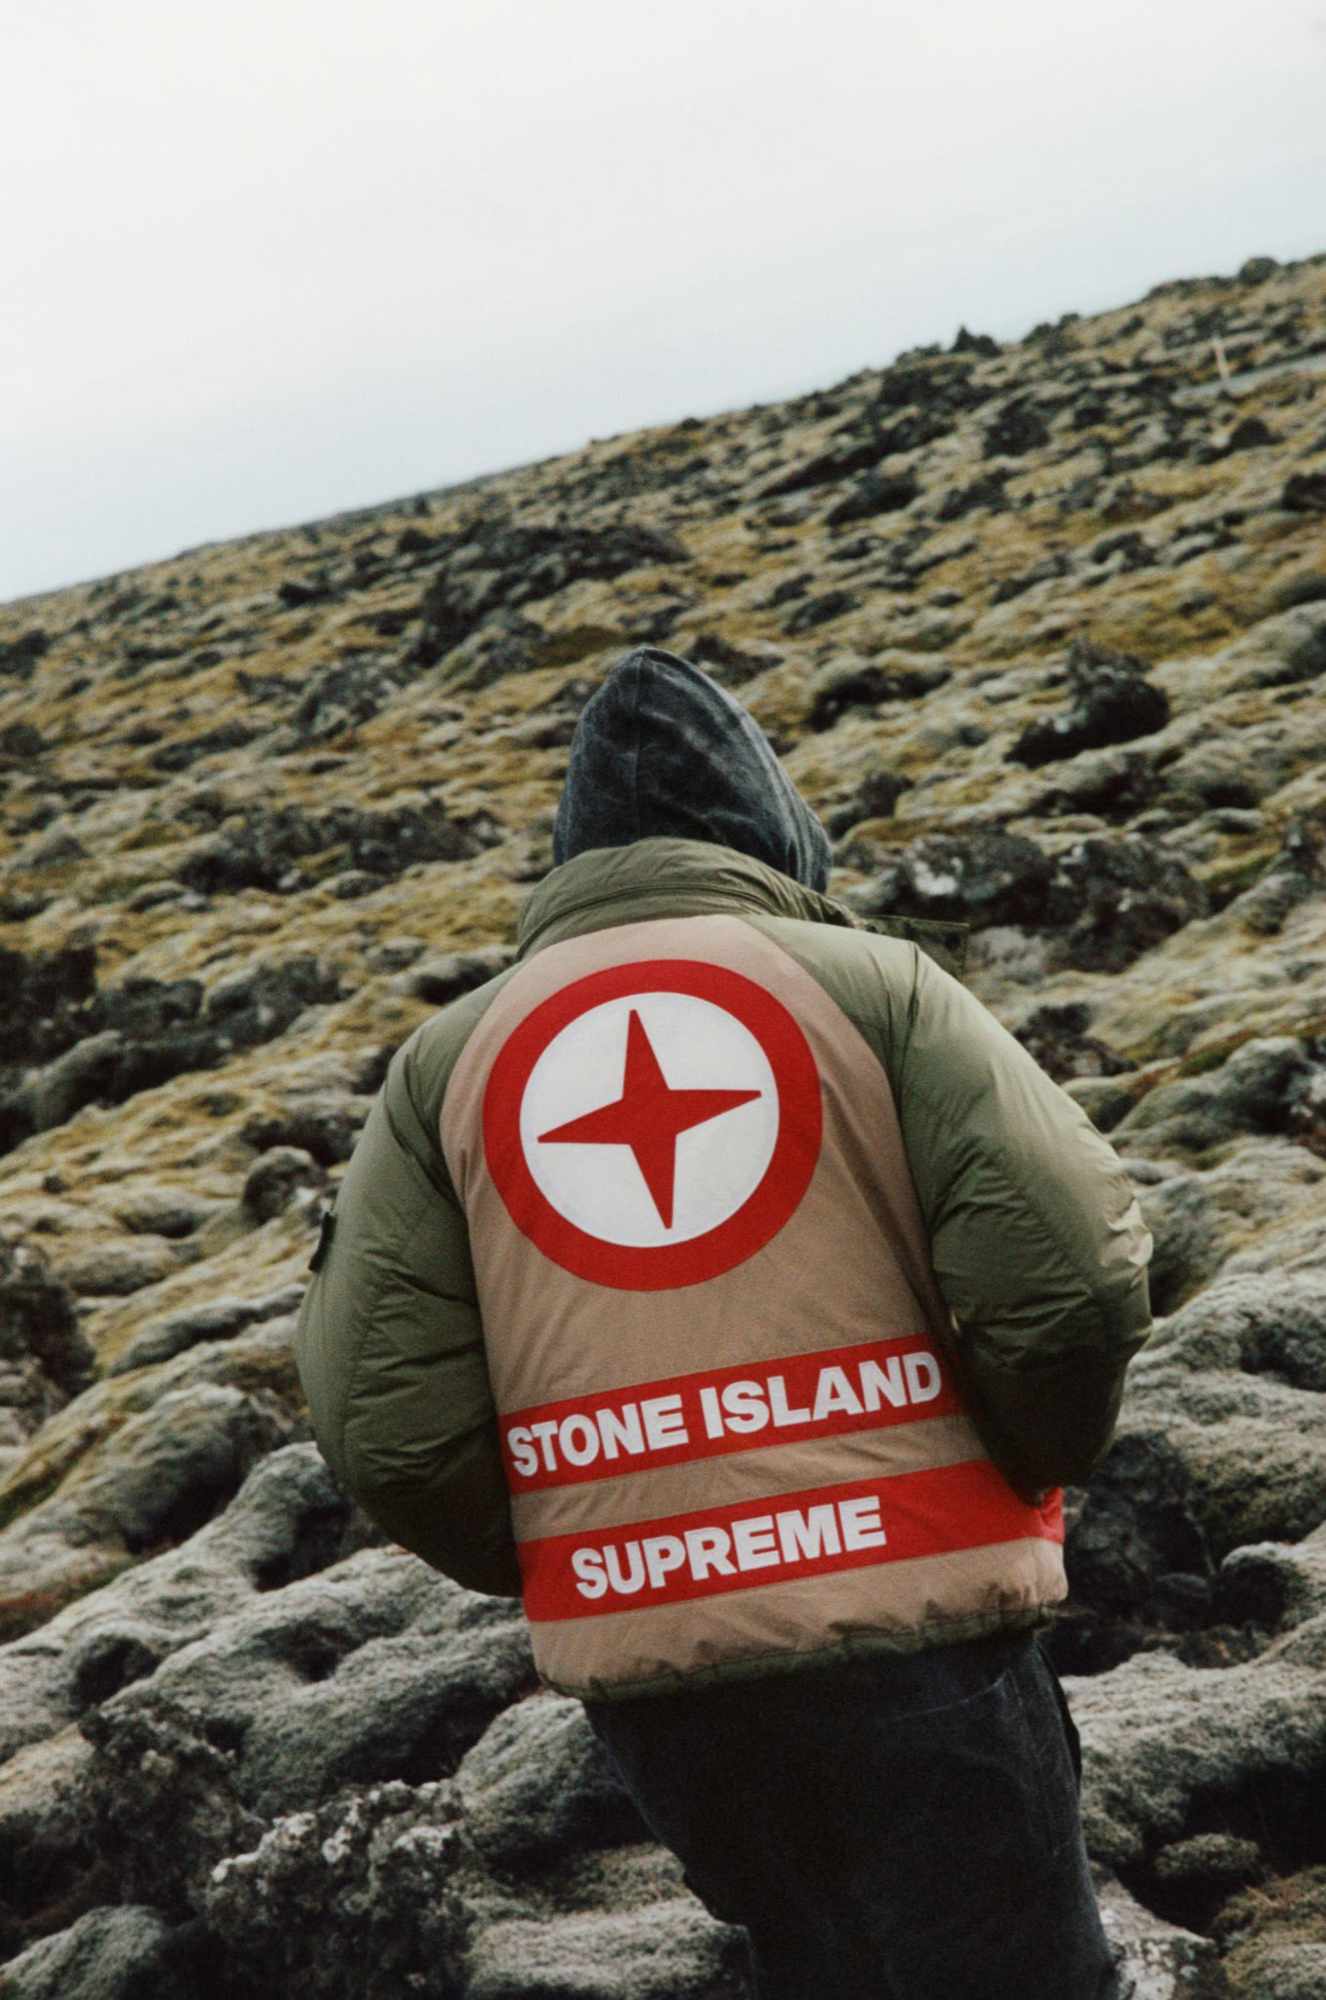 Moncler Buys Stone Island Sportswear Brand for $1.4 Billion - Bloomberg